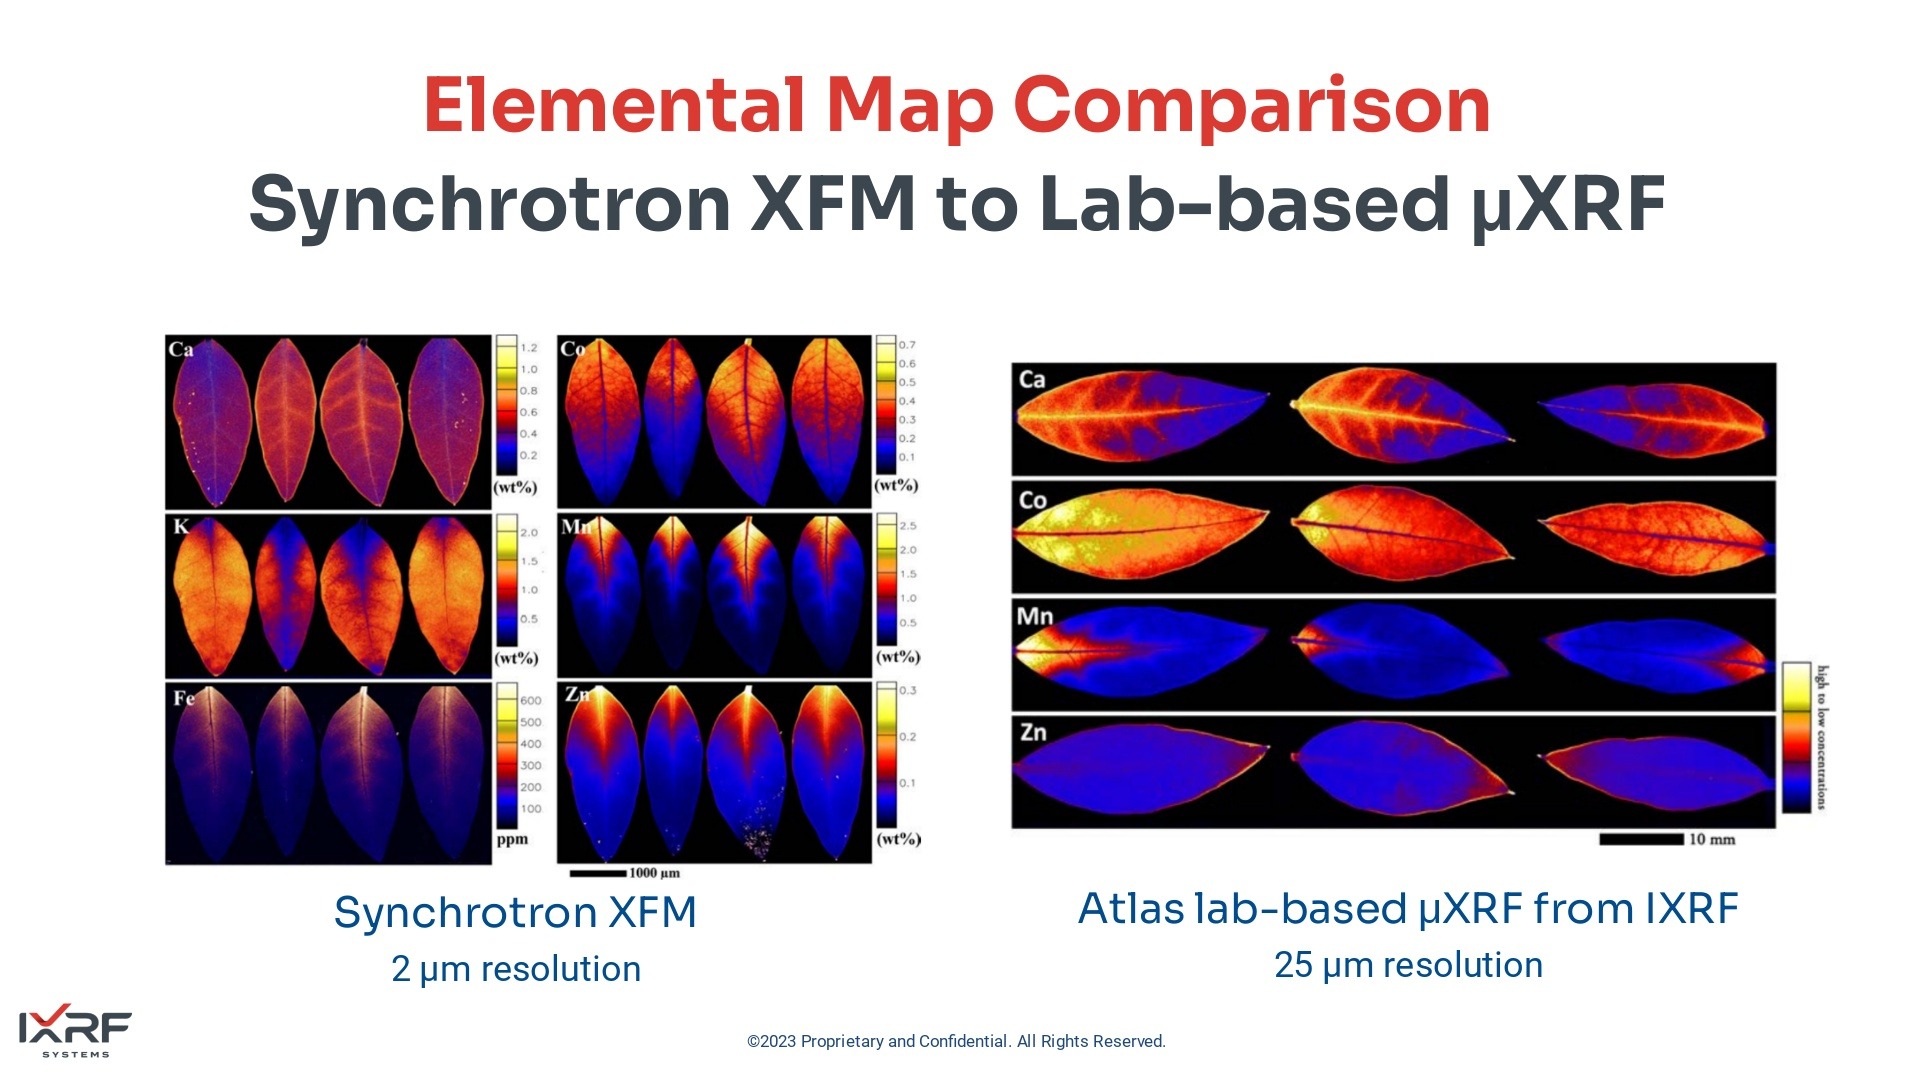 Elemental map comparison of synchrotron XFM to laboratory-based microXRF